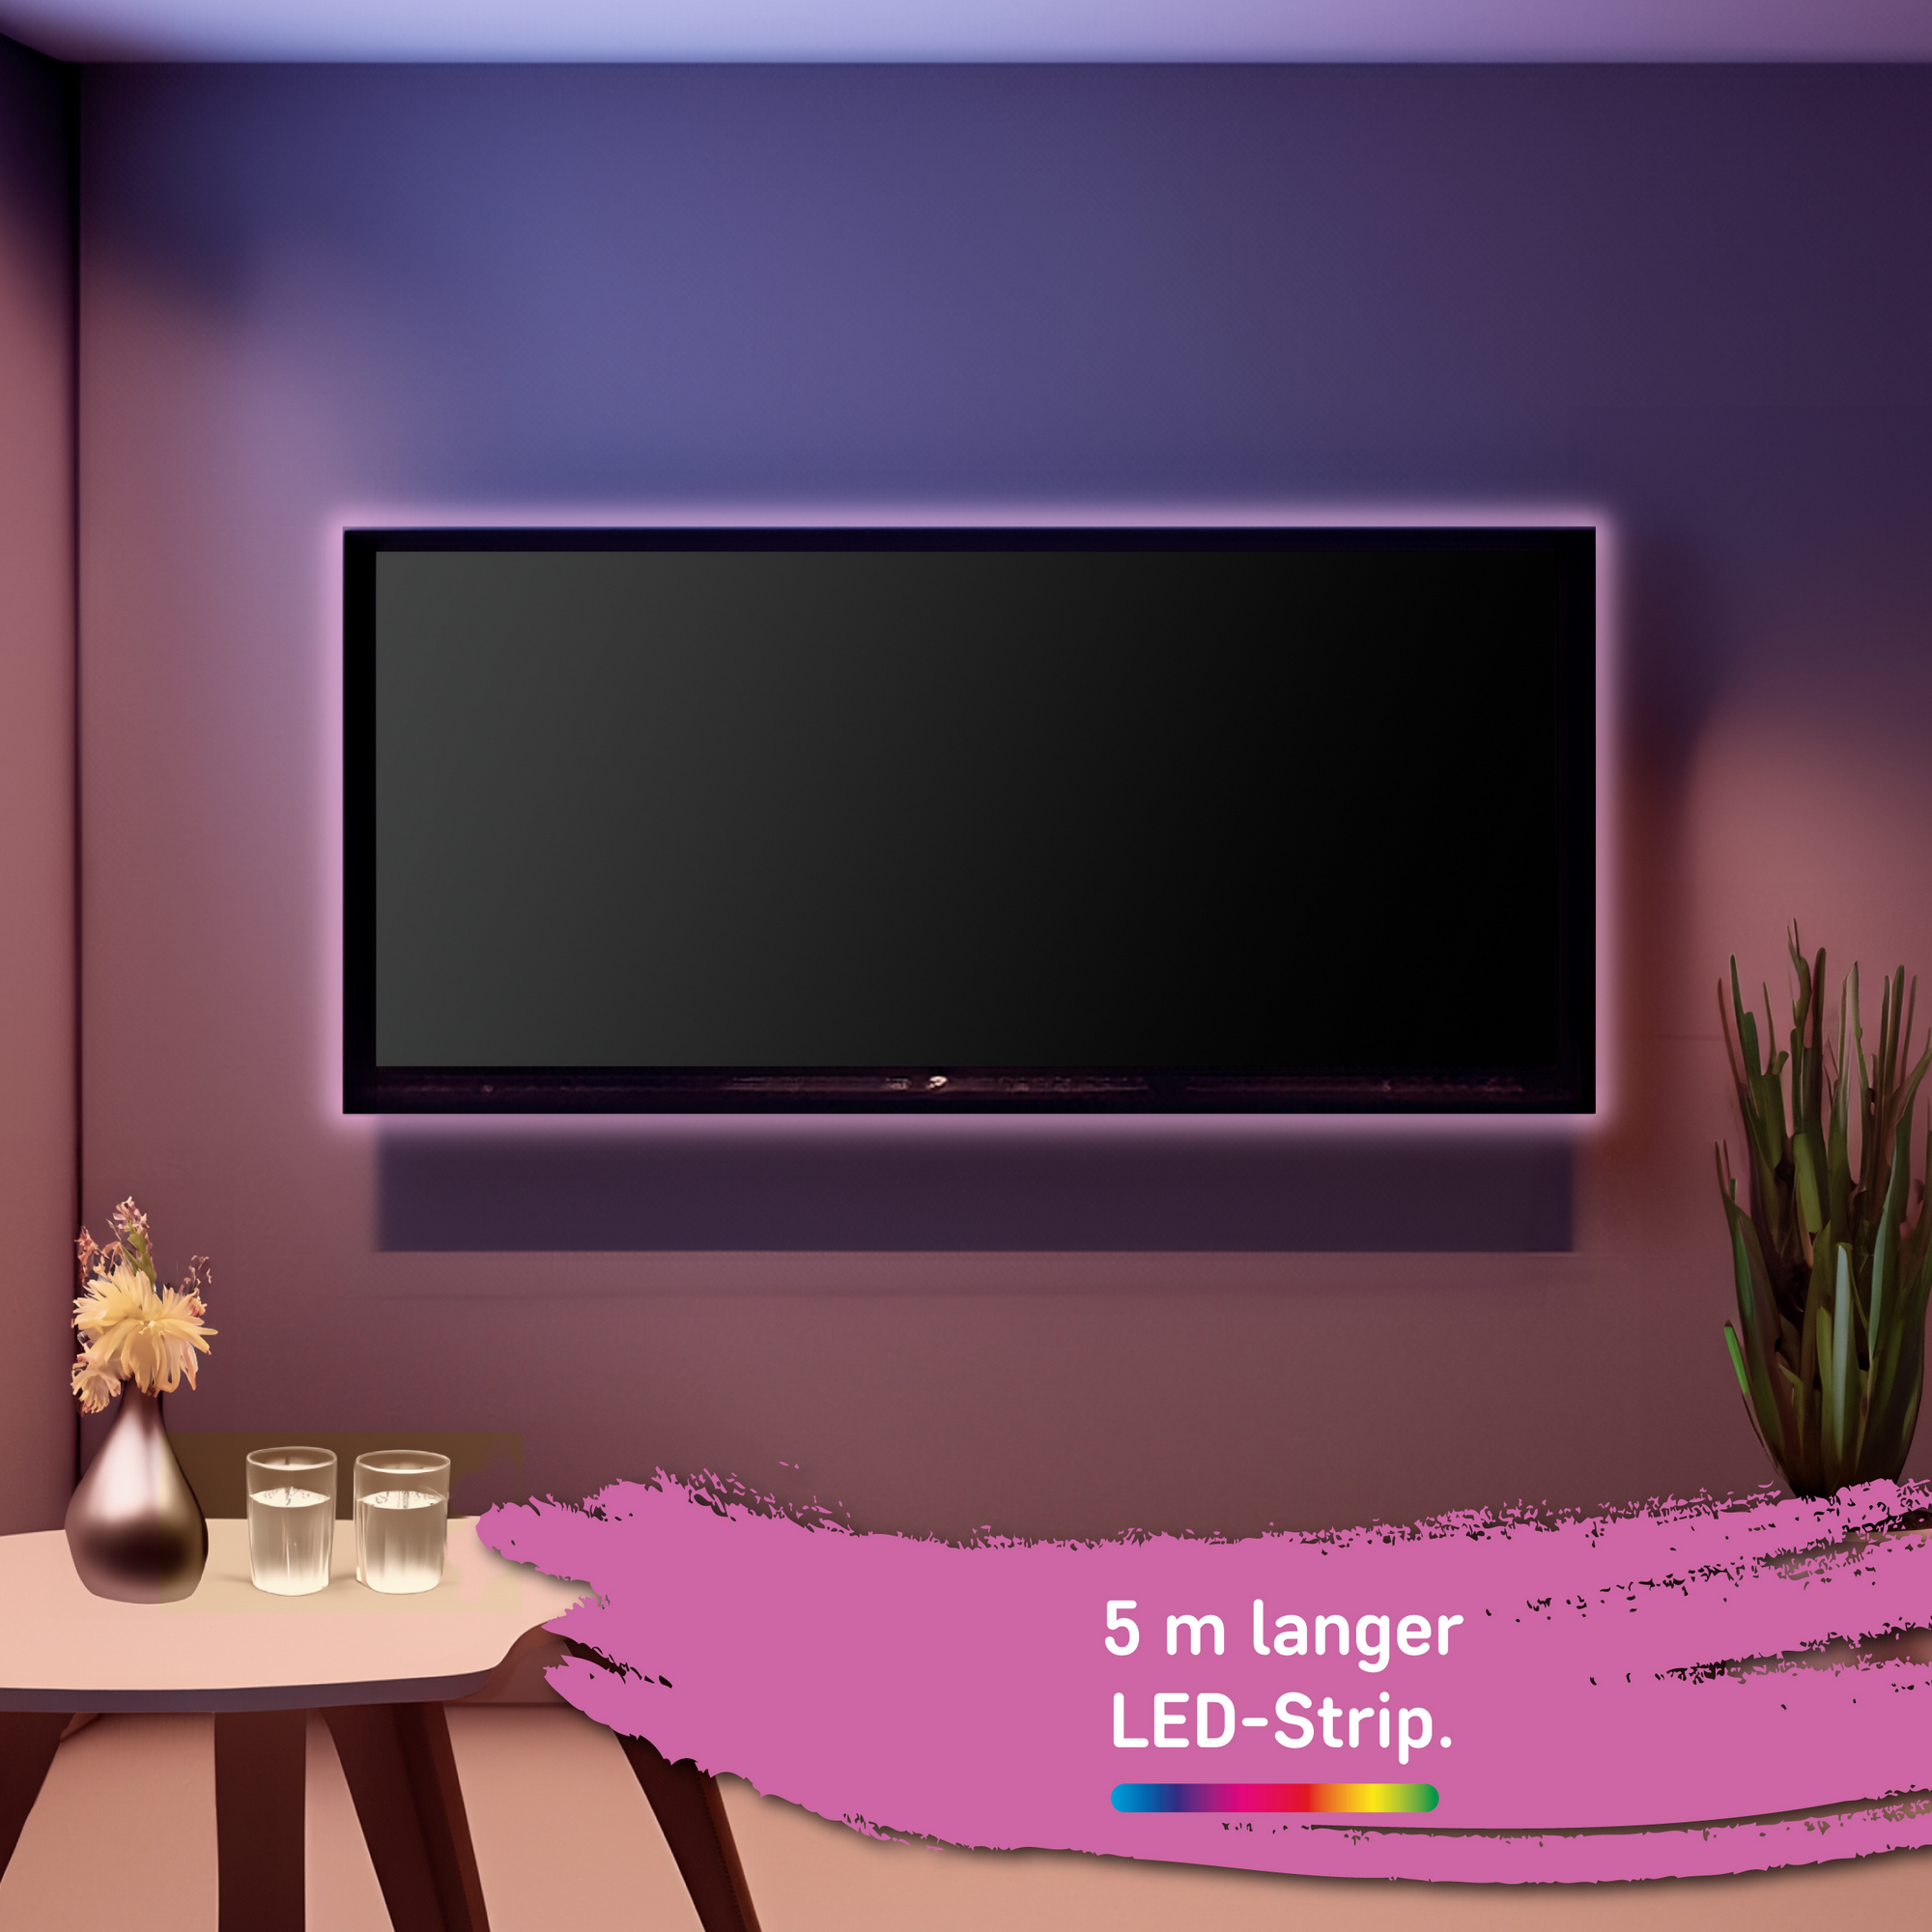 LED-Streifen 'Smart' RGB 5 m + product picture